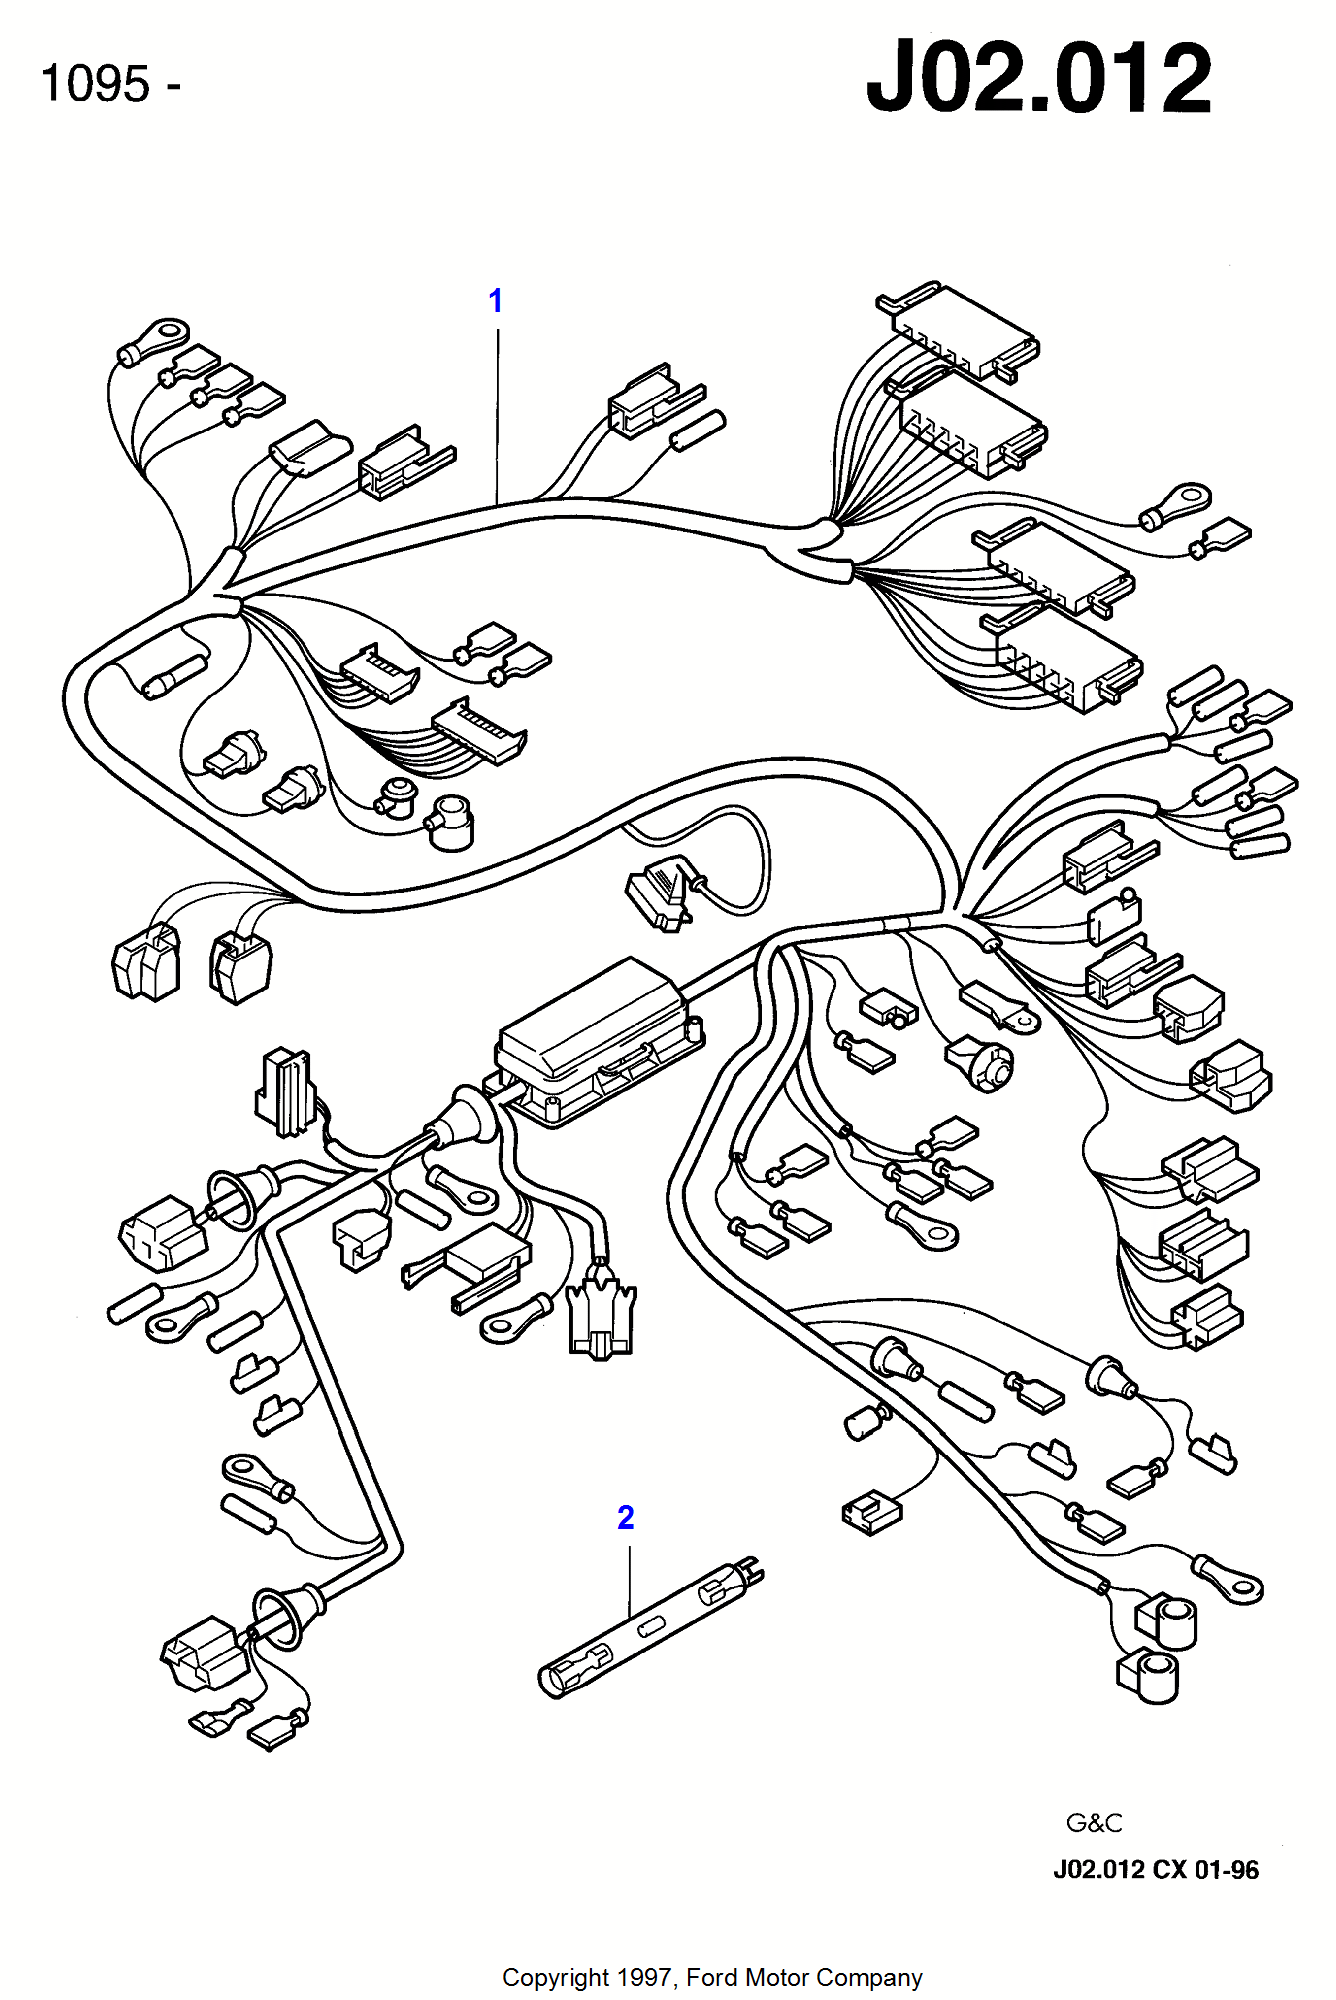 Main Wiring for Ford Fiesta Fiesta 1989-1996               (CX)